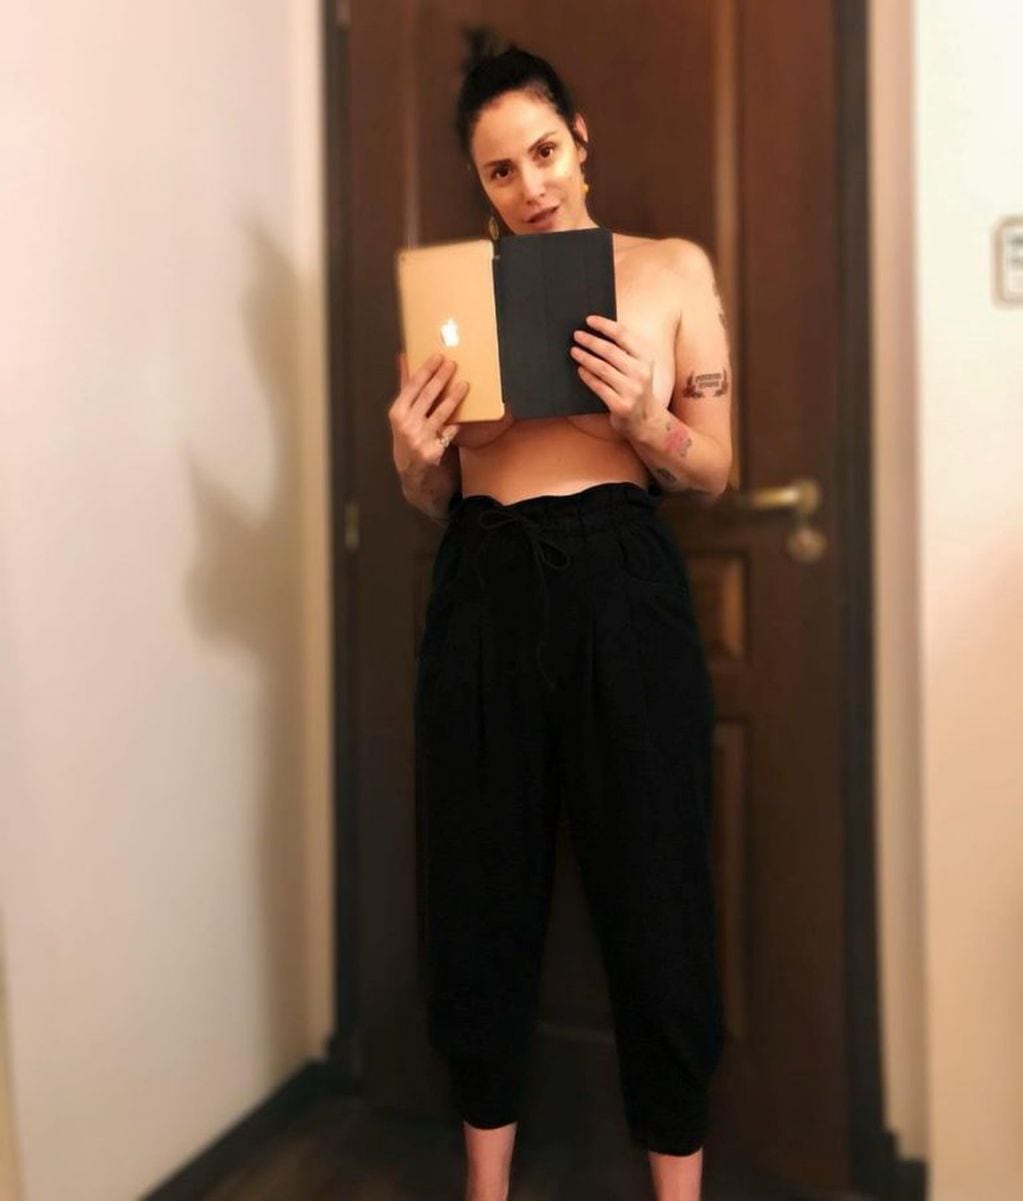 Connie Ansaldi sorprendió a sus seguidores con un "topless tecnológico" (Foto: Instagram/ connieansaldi)